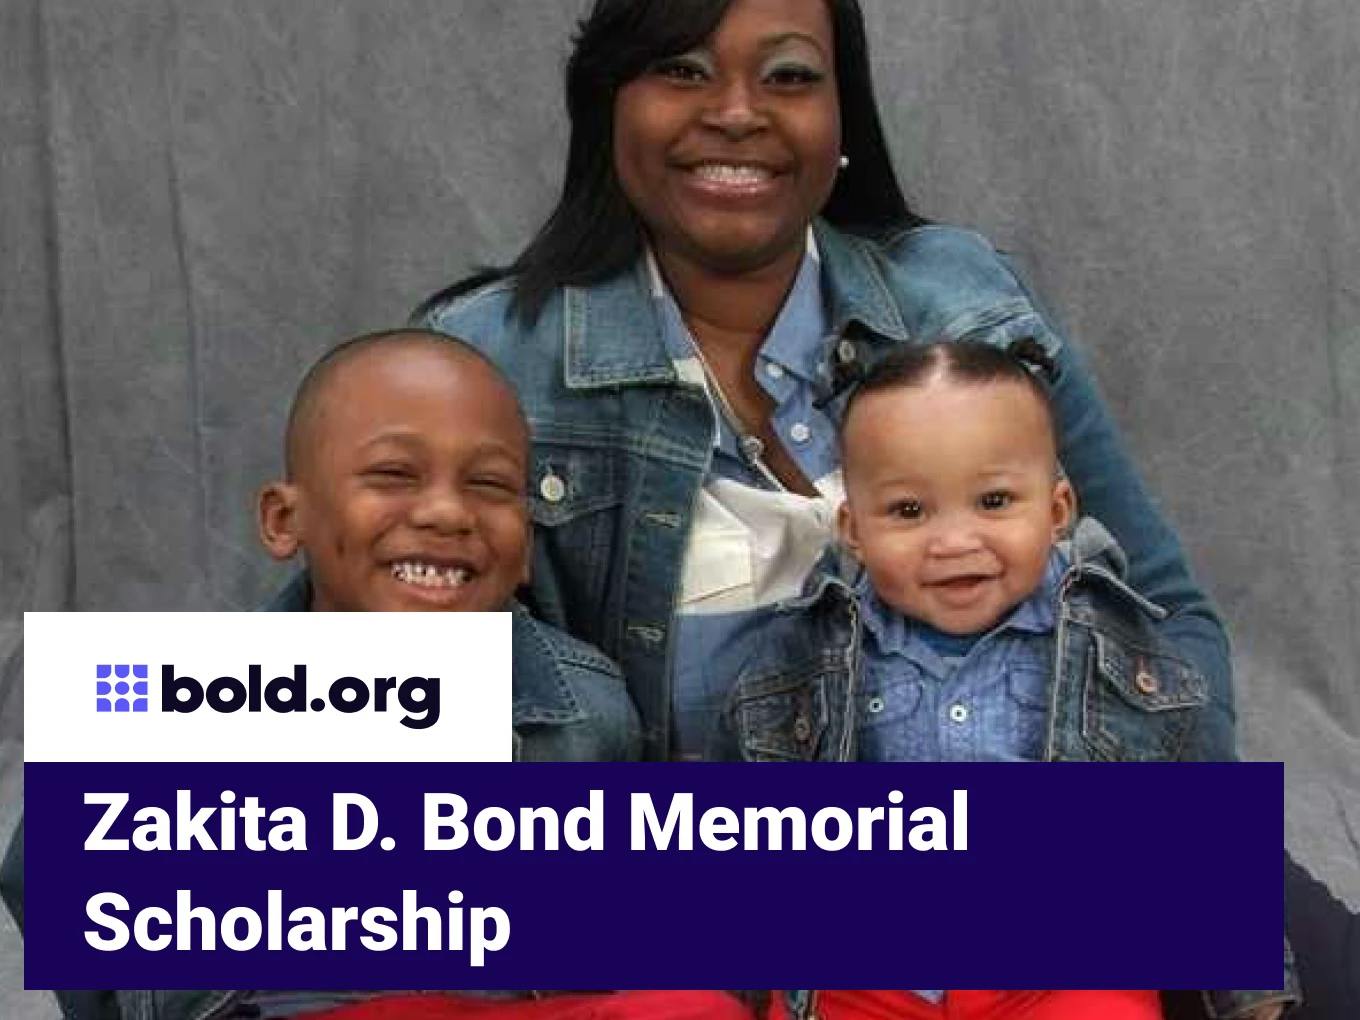 Zakita D. Bond Memorial Scholarship